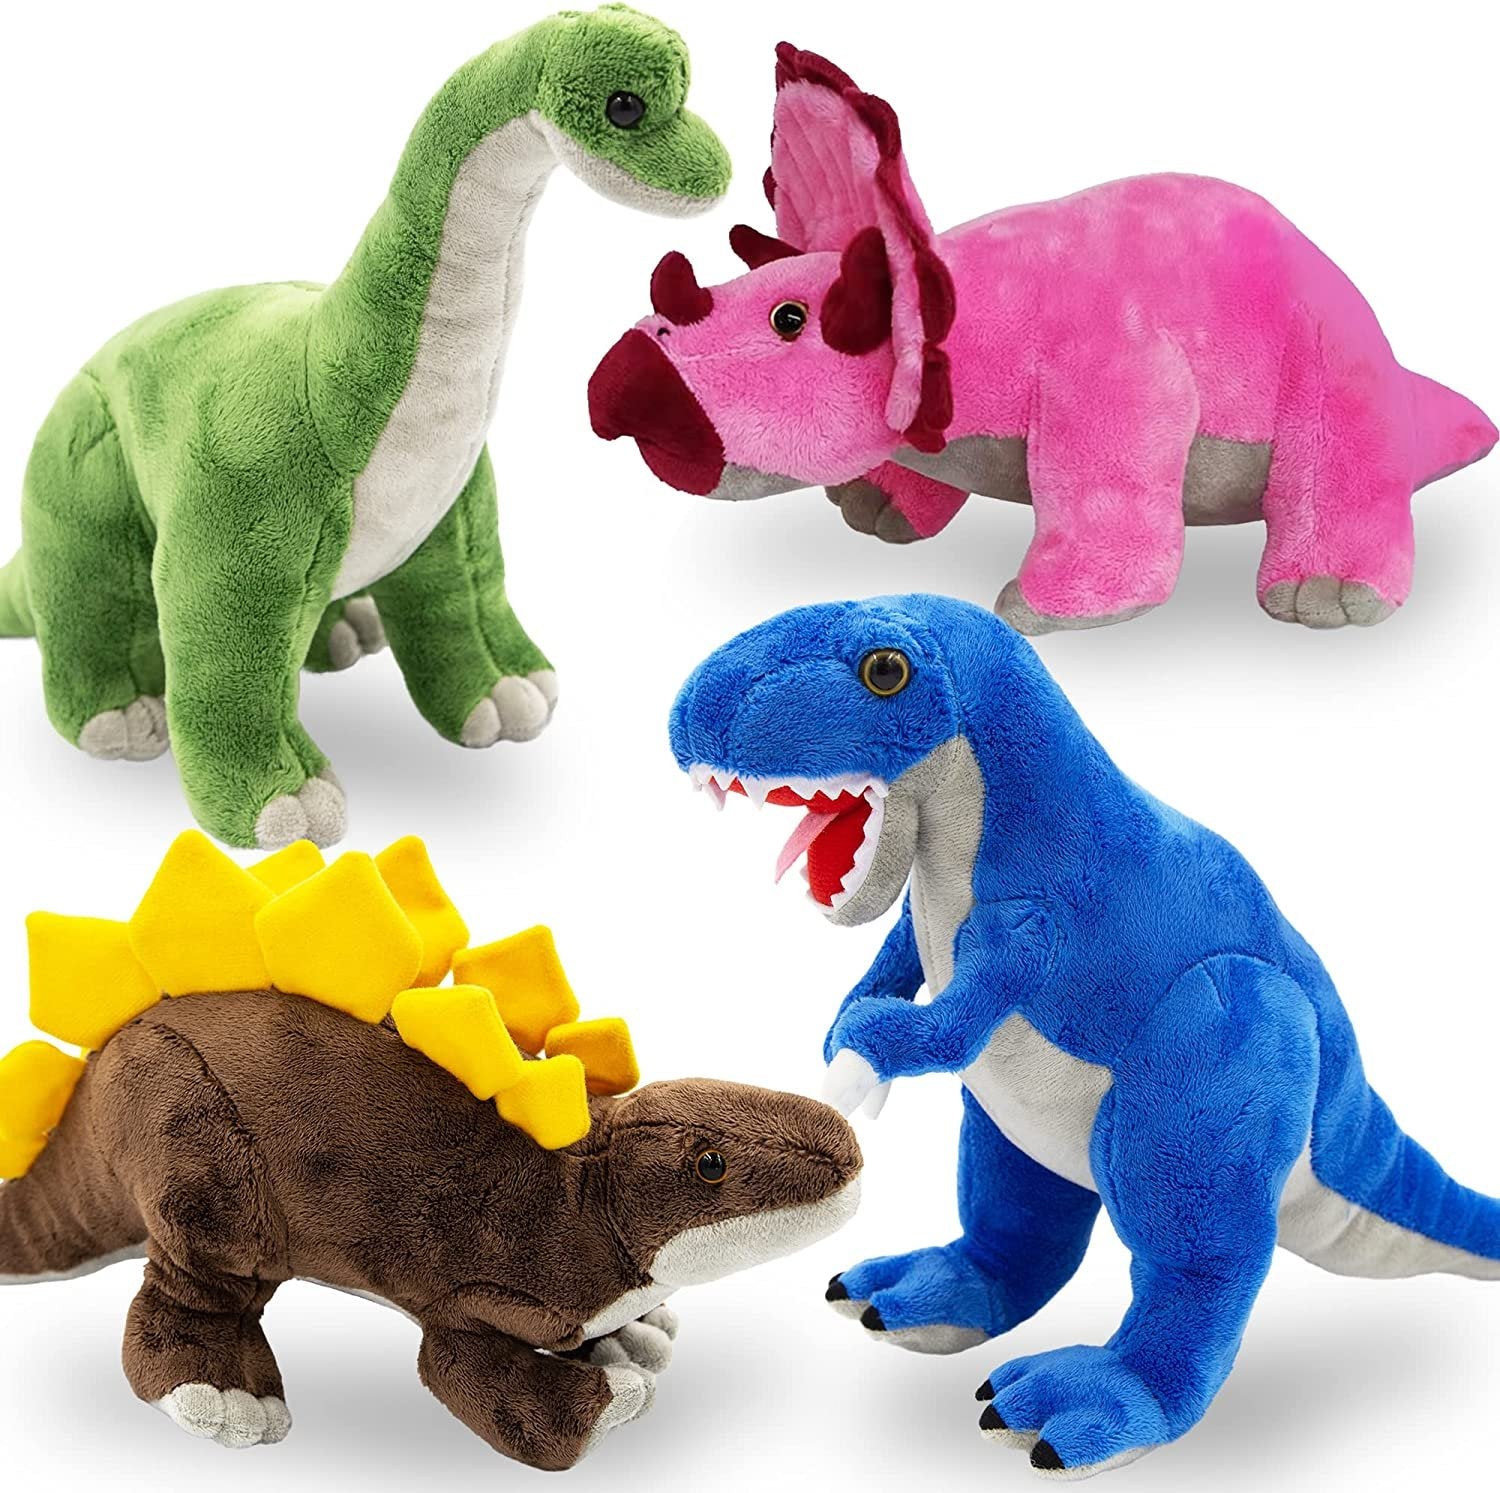 Plush Dinosaur Stuffed Animals for Kids, Set of 4, Stuffed Dinosaur Plushy for Boys and Girls Ages 3+, Plush Animals Dinosaur Toys For Kids, Dino Plush Easter Dinosaur Plush Party Favors